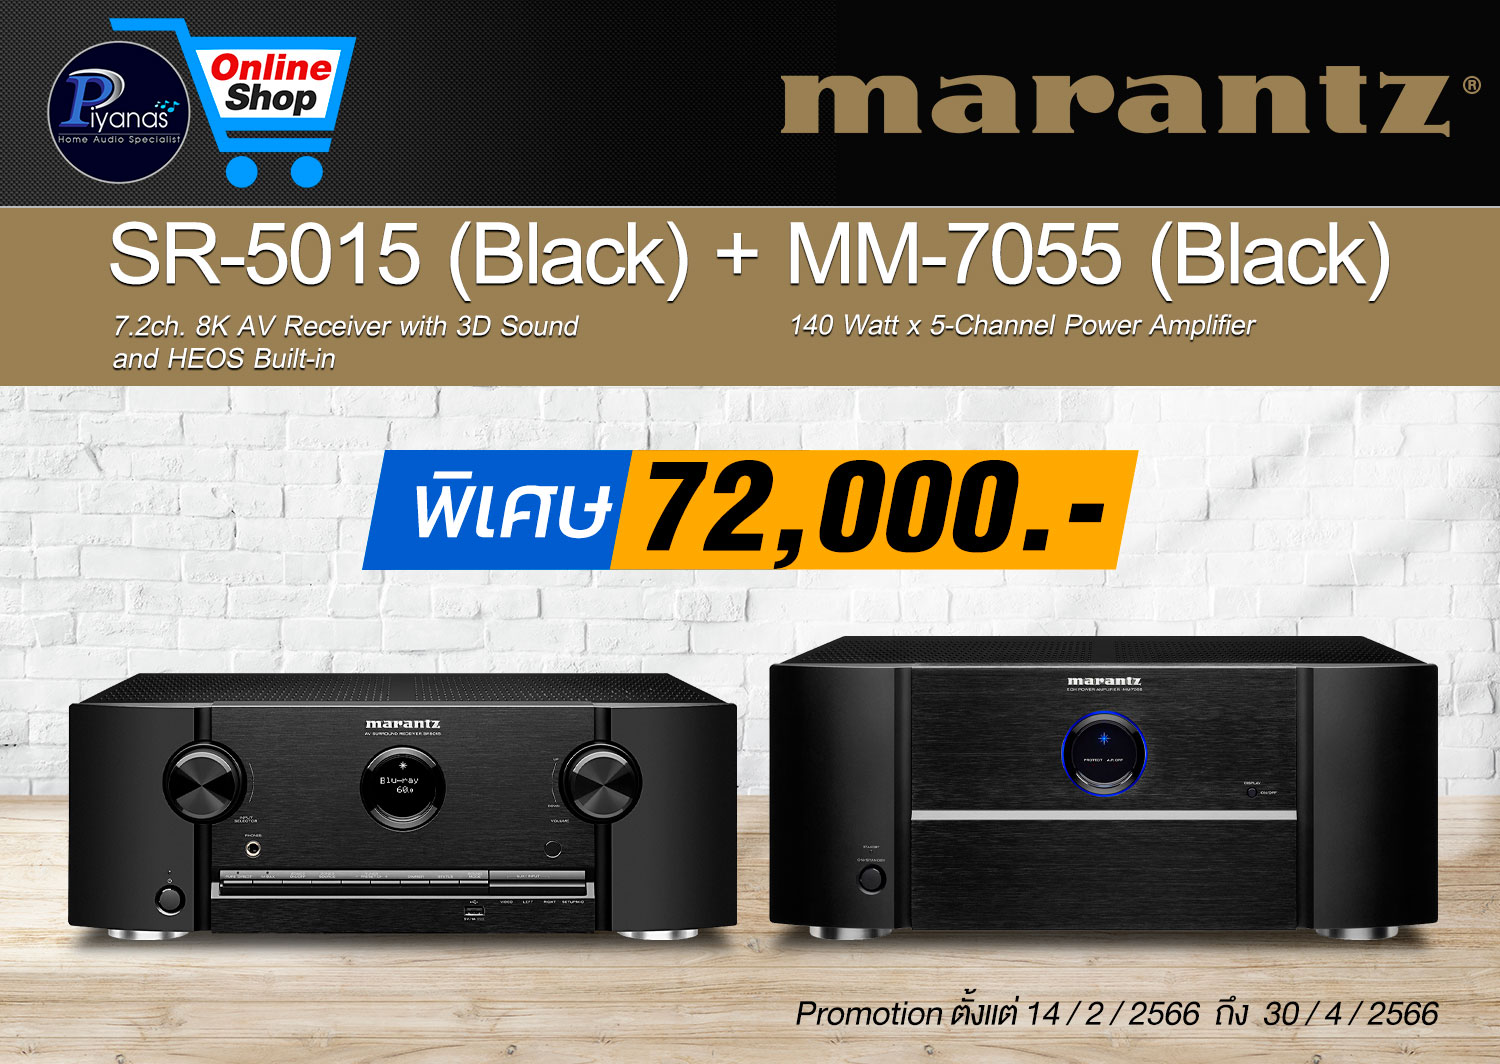 SR-5015 (Black) + MM-7055 (Black)